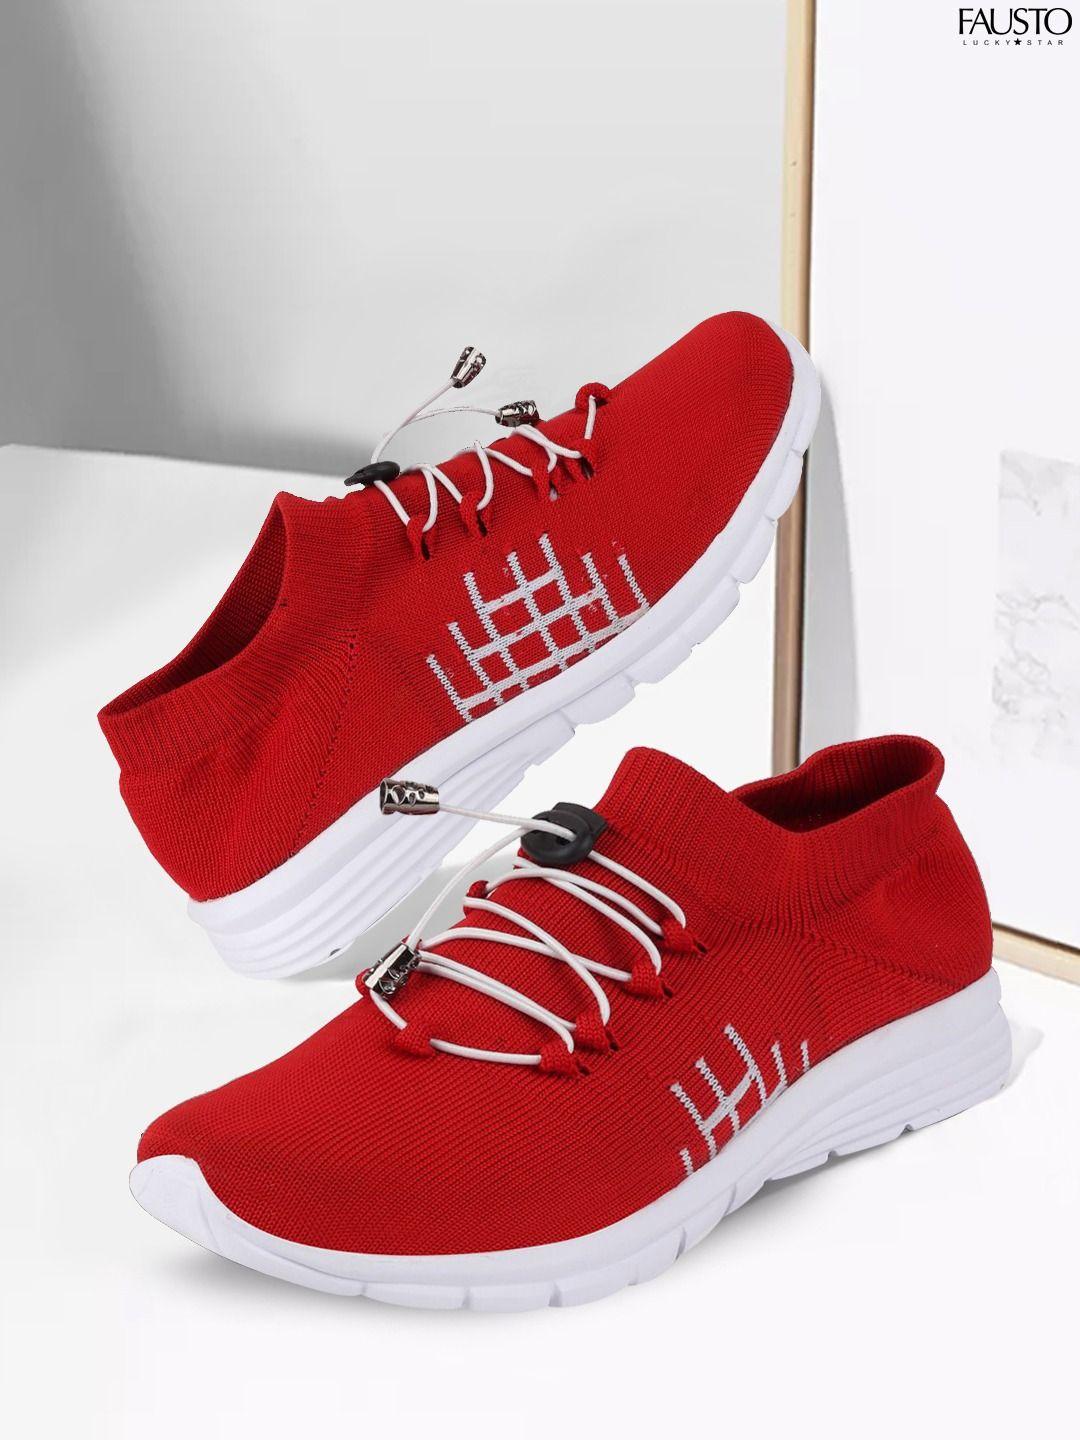 fausto men red mesh running non-marking shoes